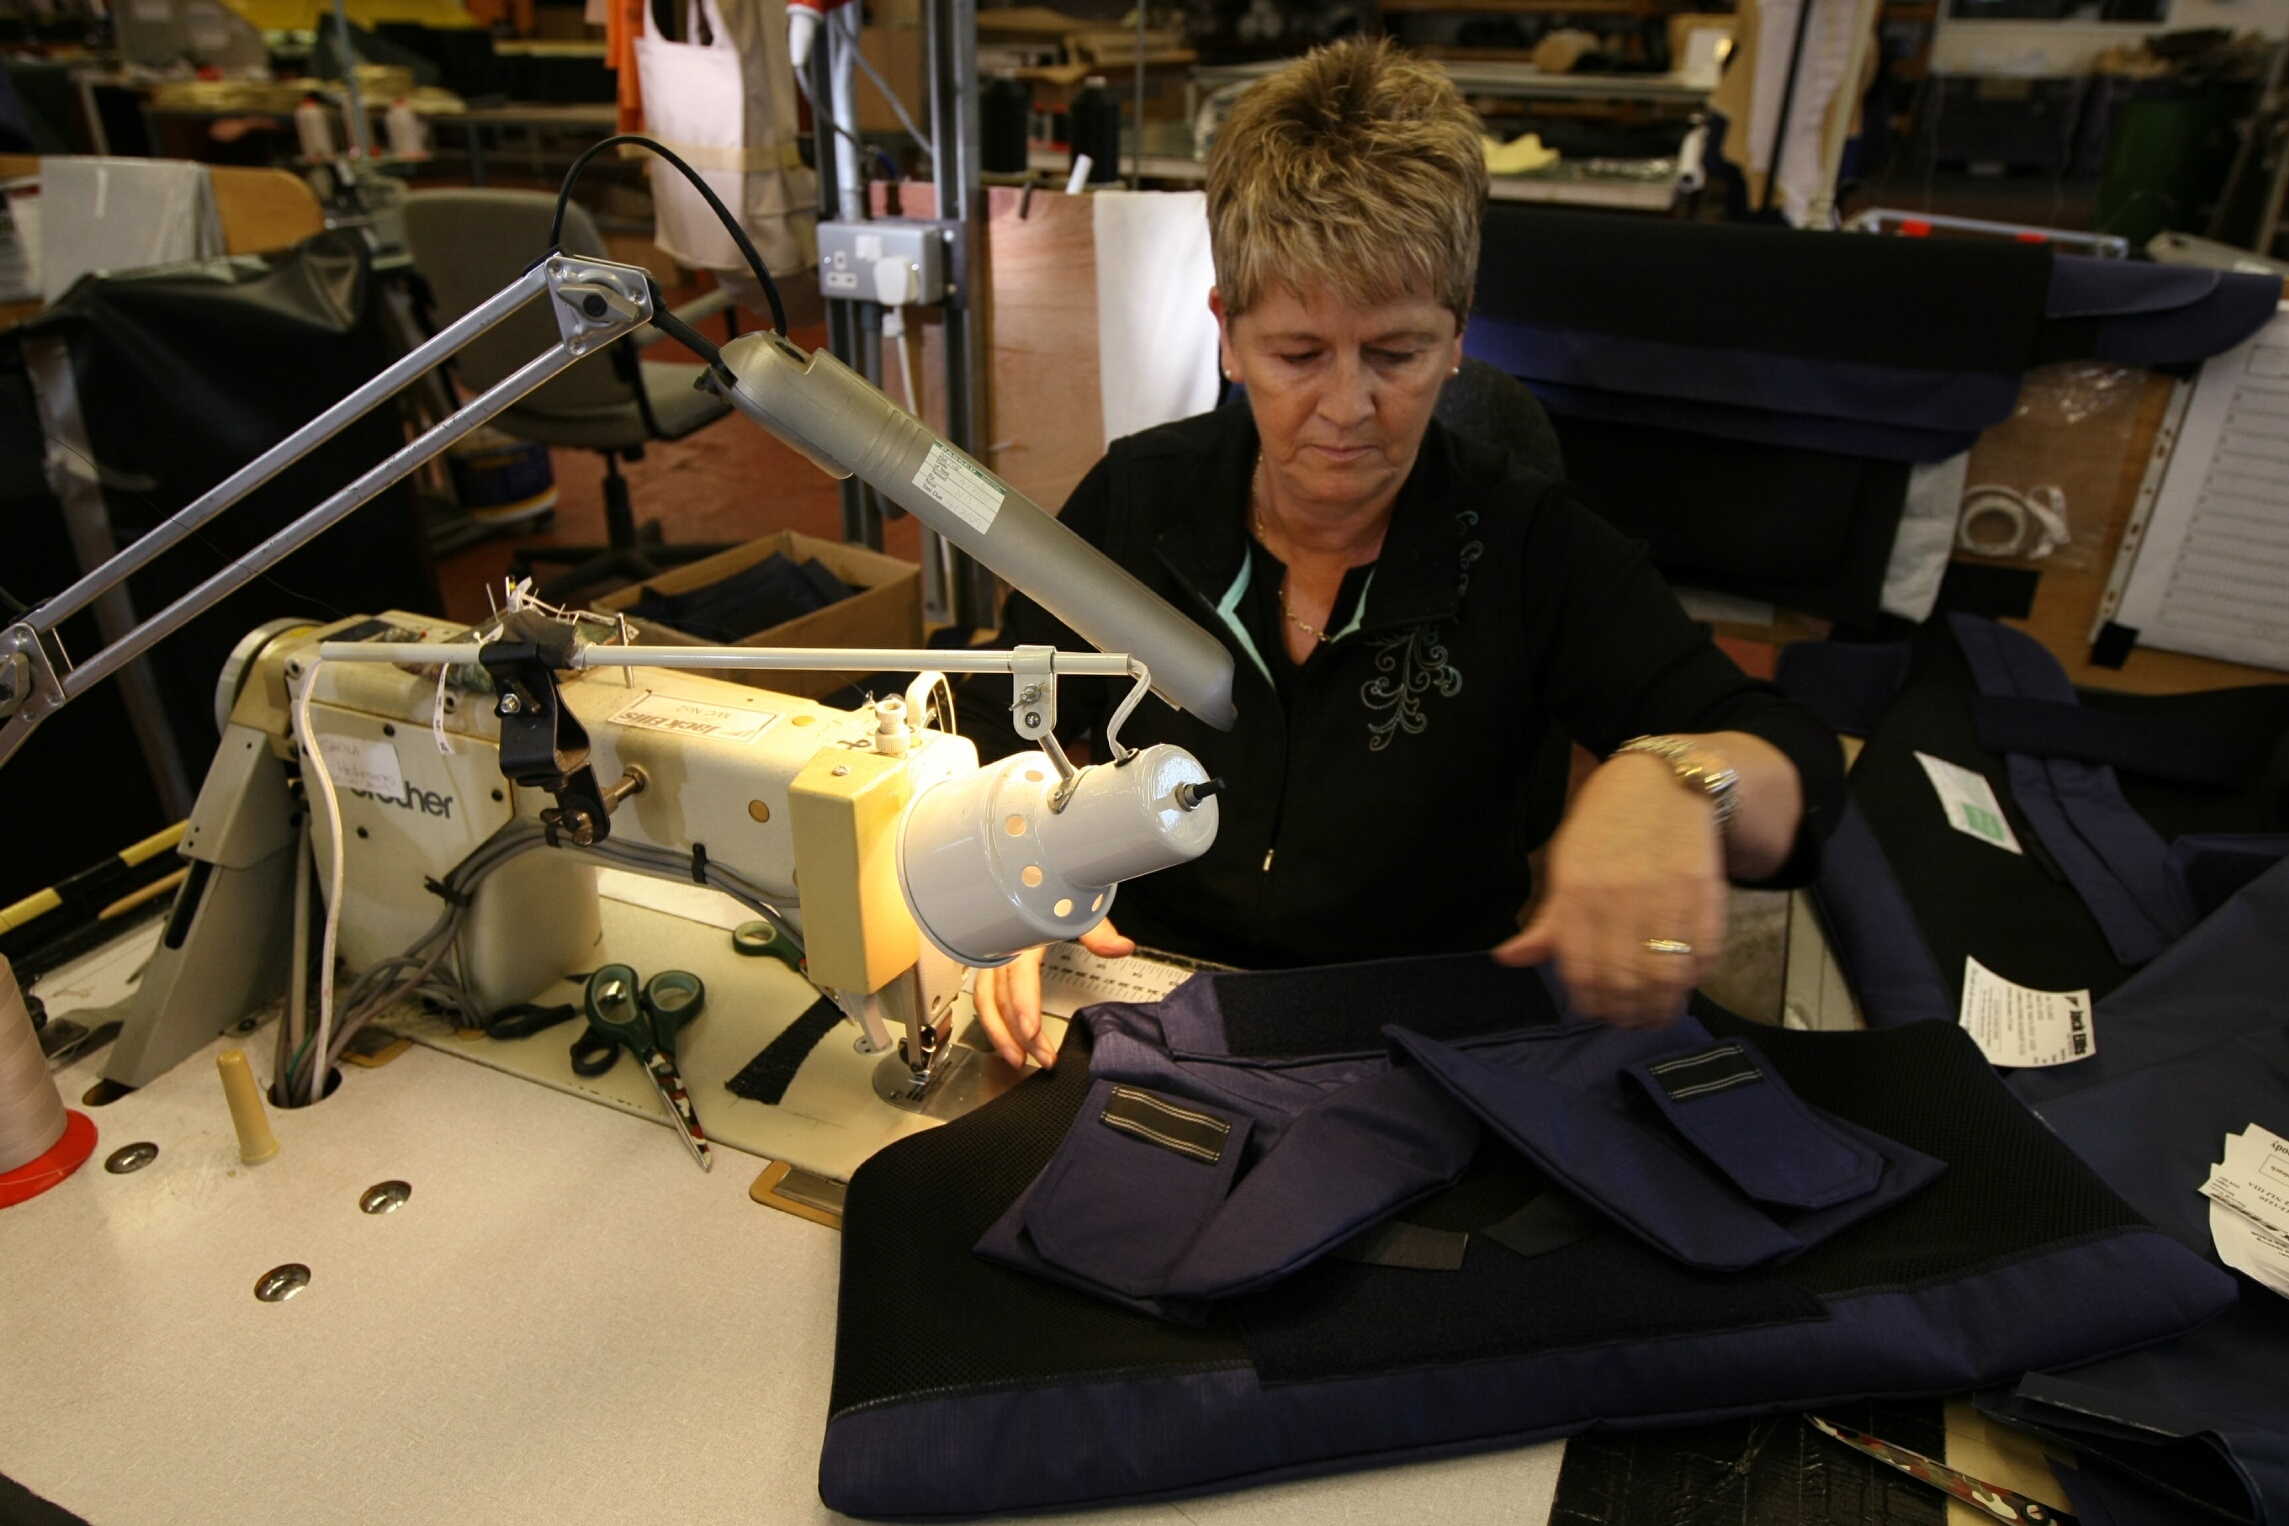 Making body protection vests at the Jack Ellis facility in Kirriemuir